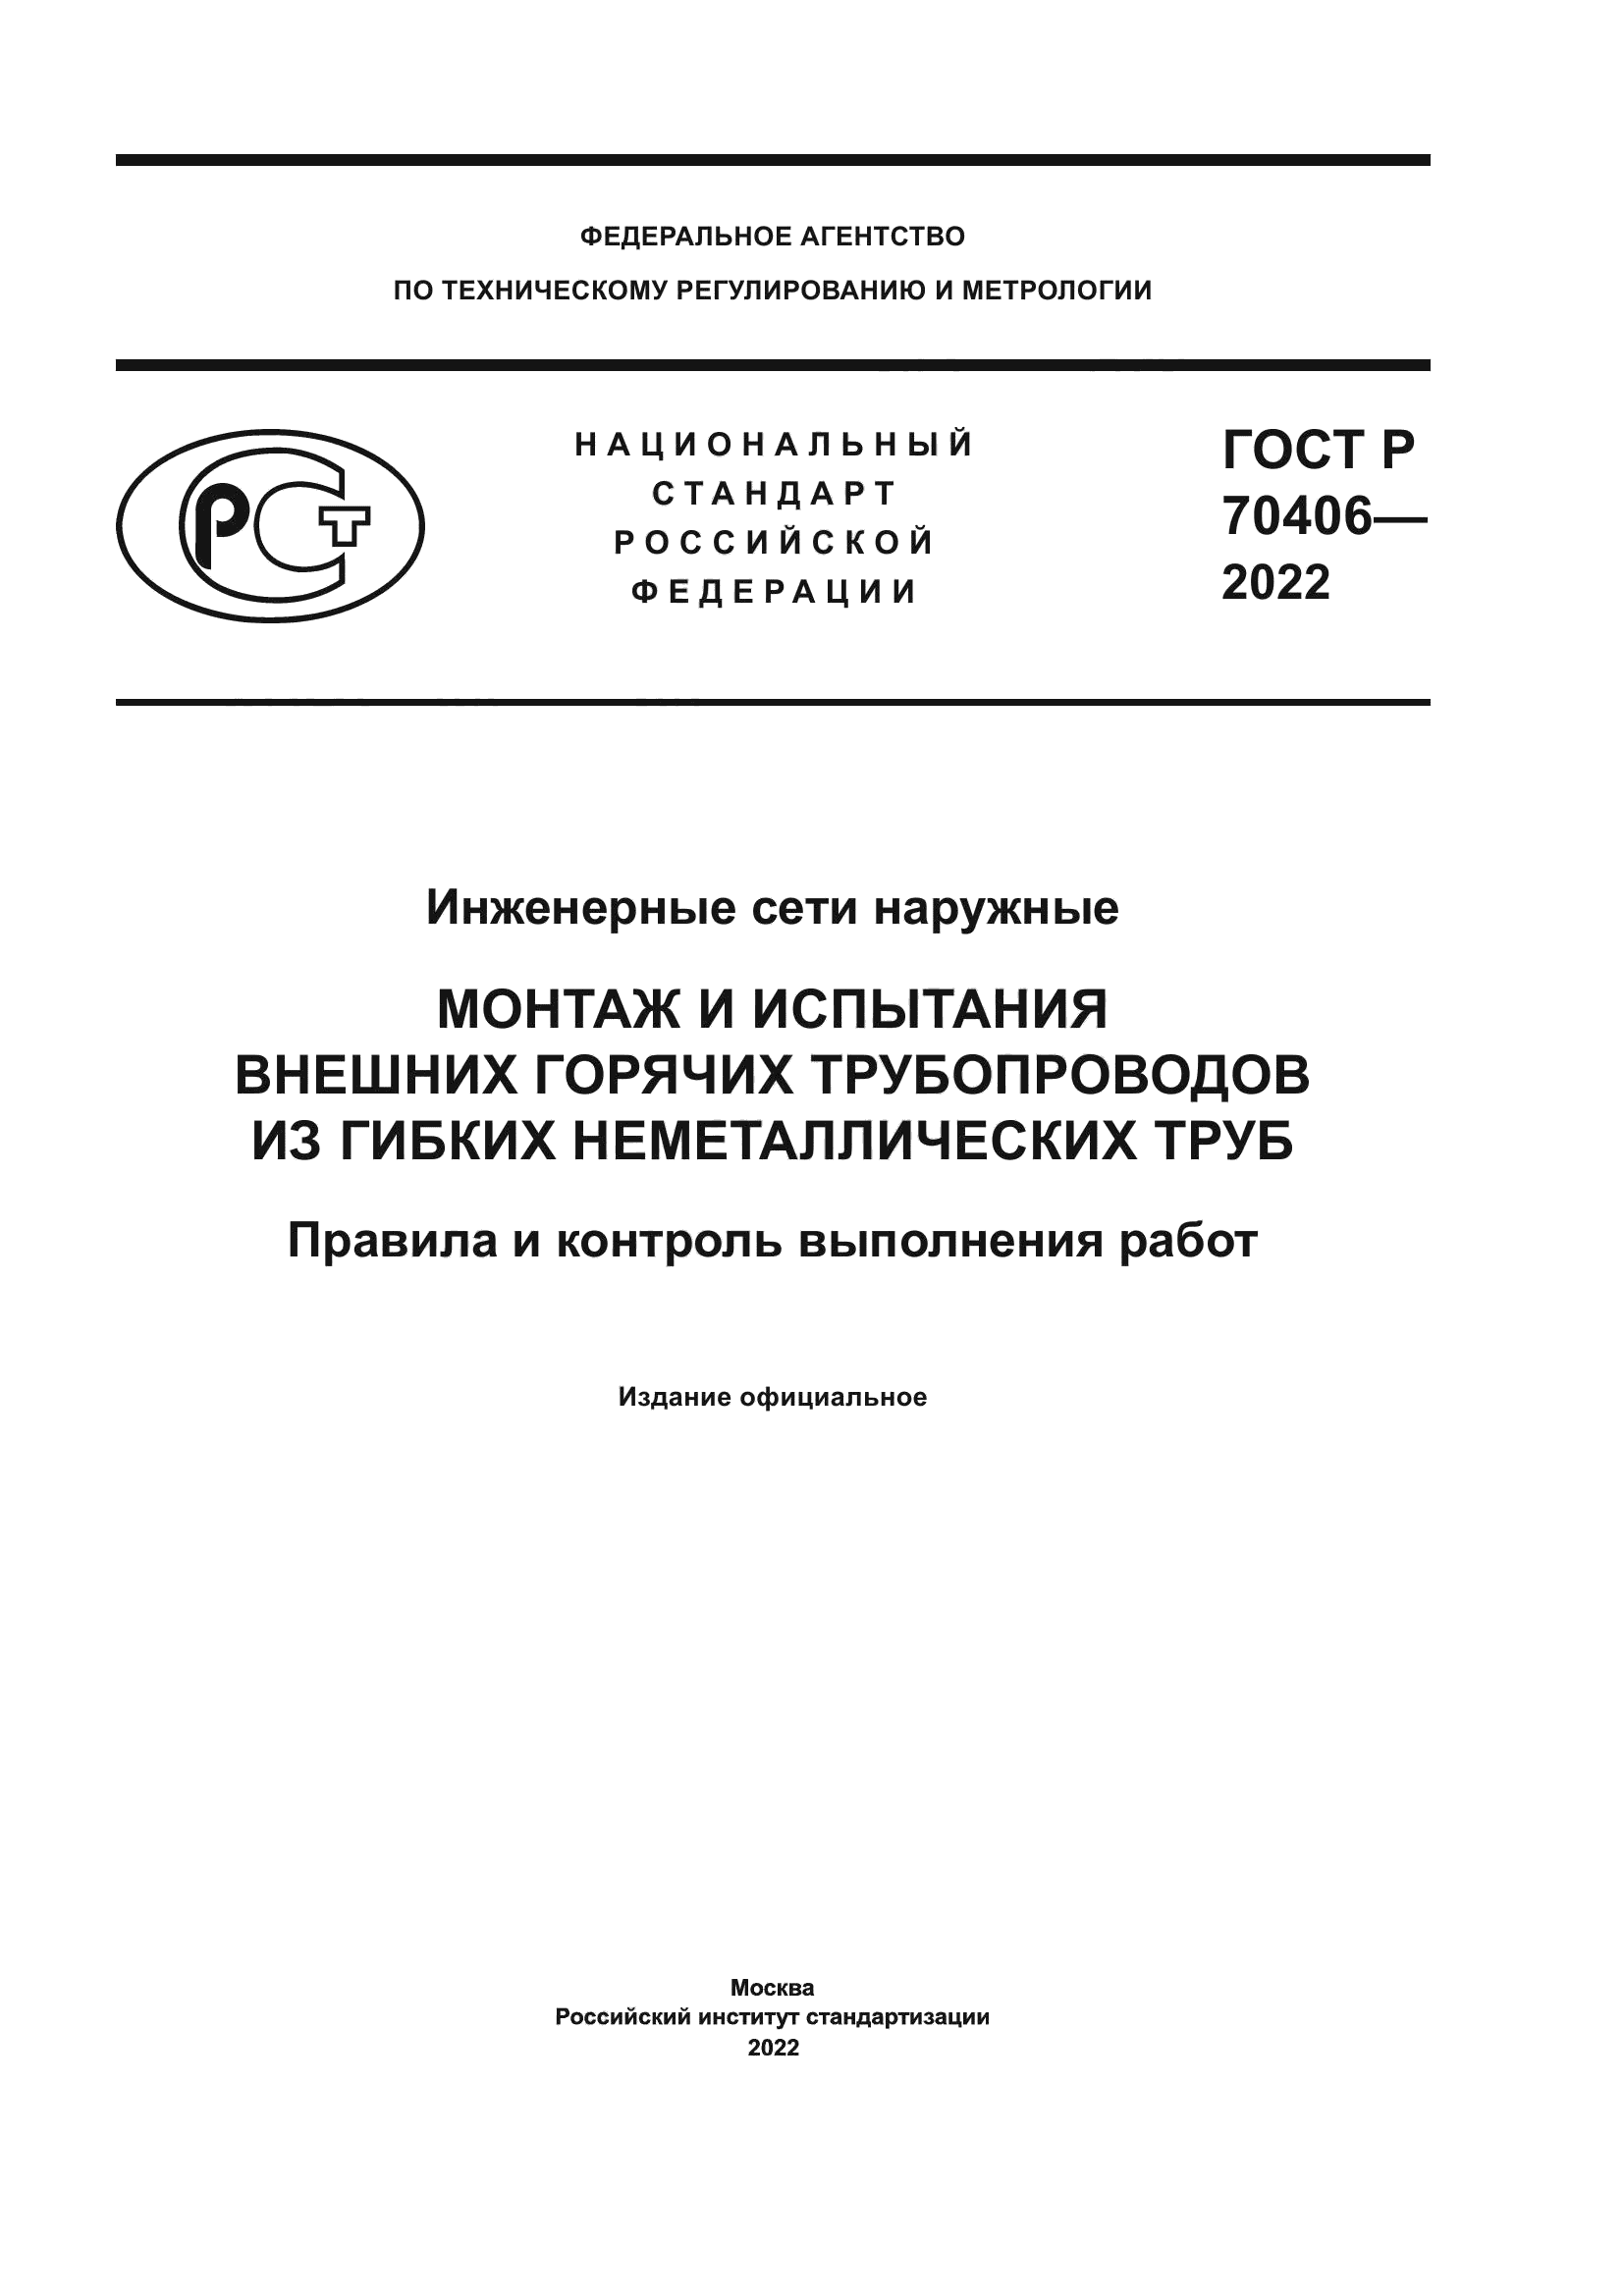 ГОСТ Р 70406-2022